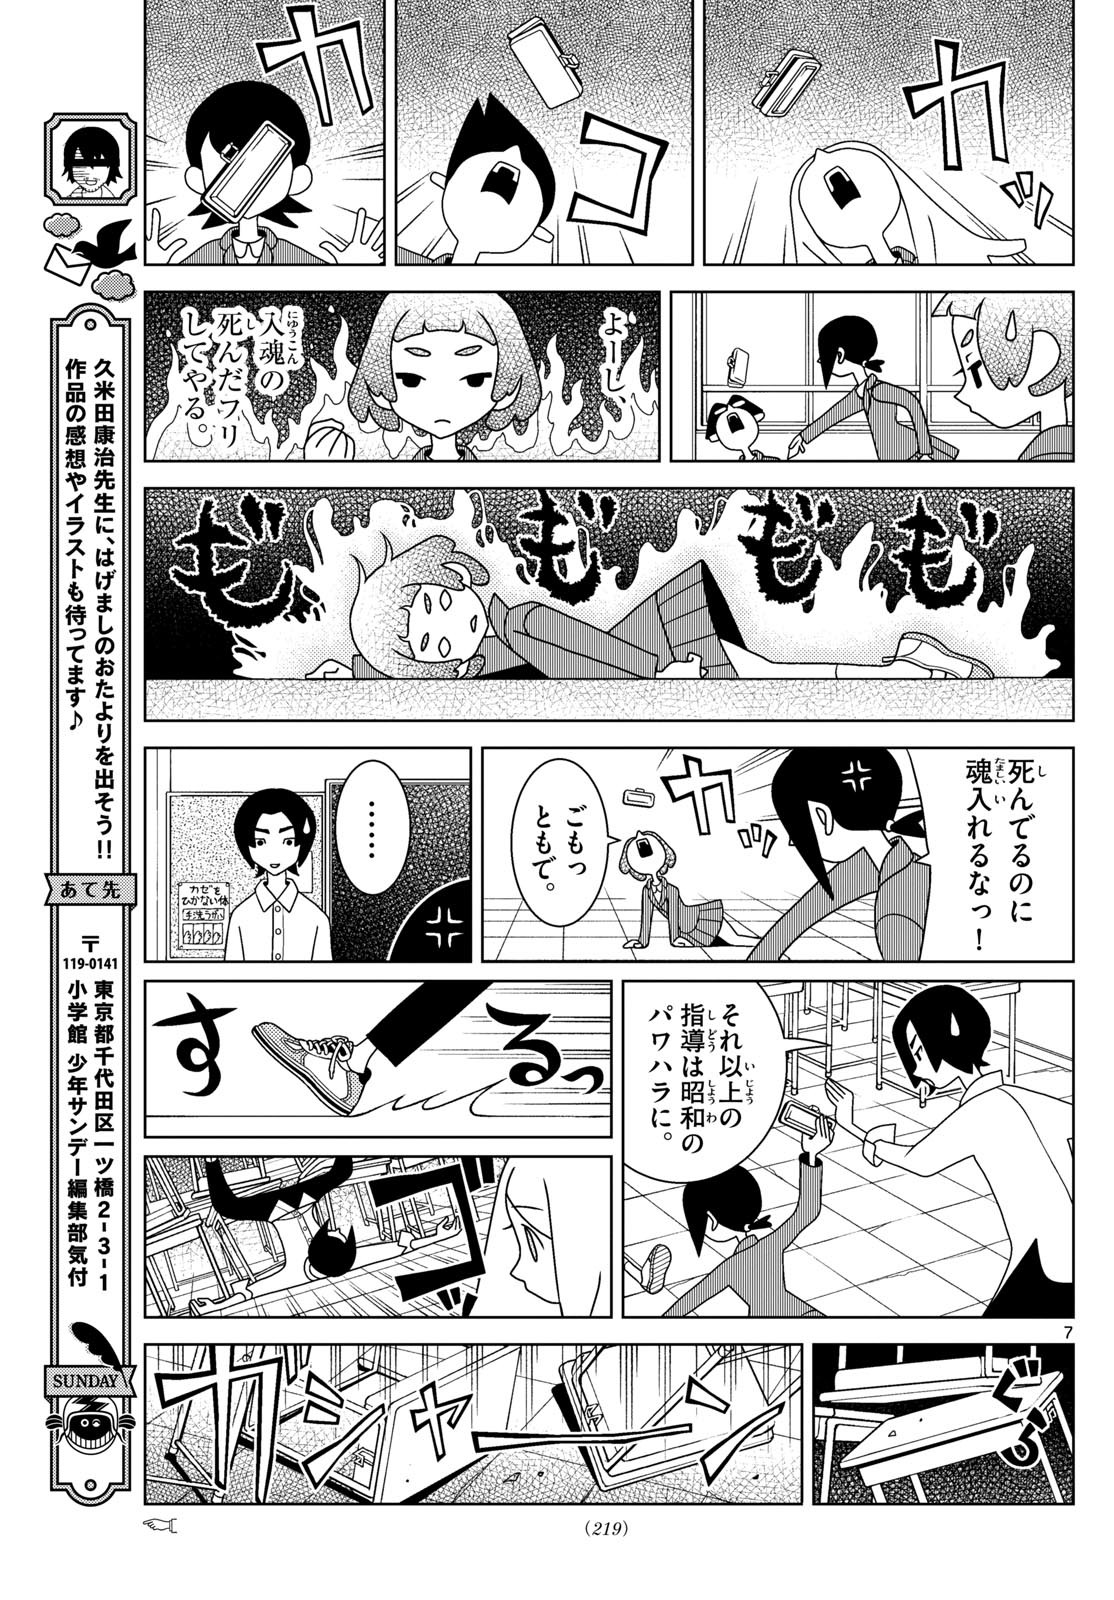 Shibuya Near Family - Chapter 082 - Page 7